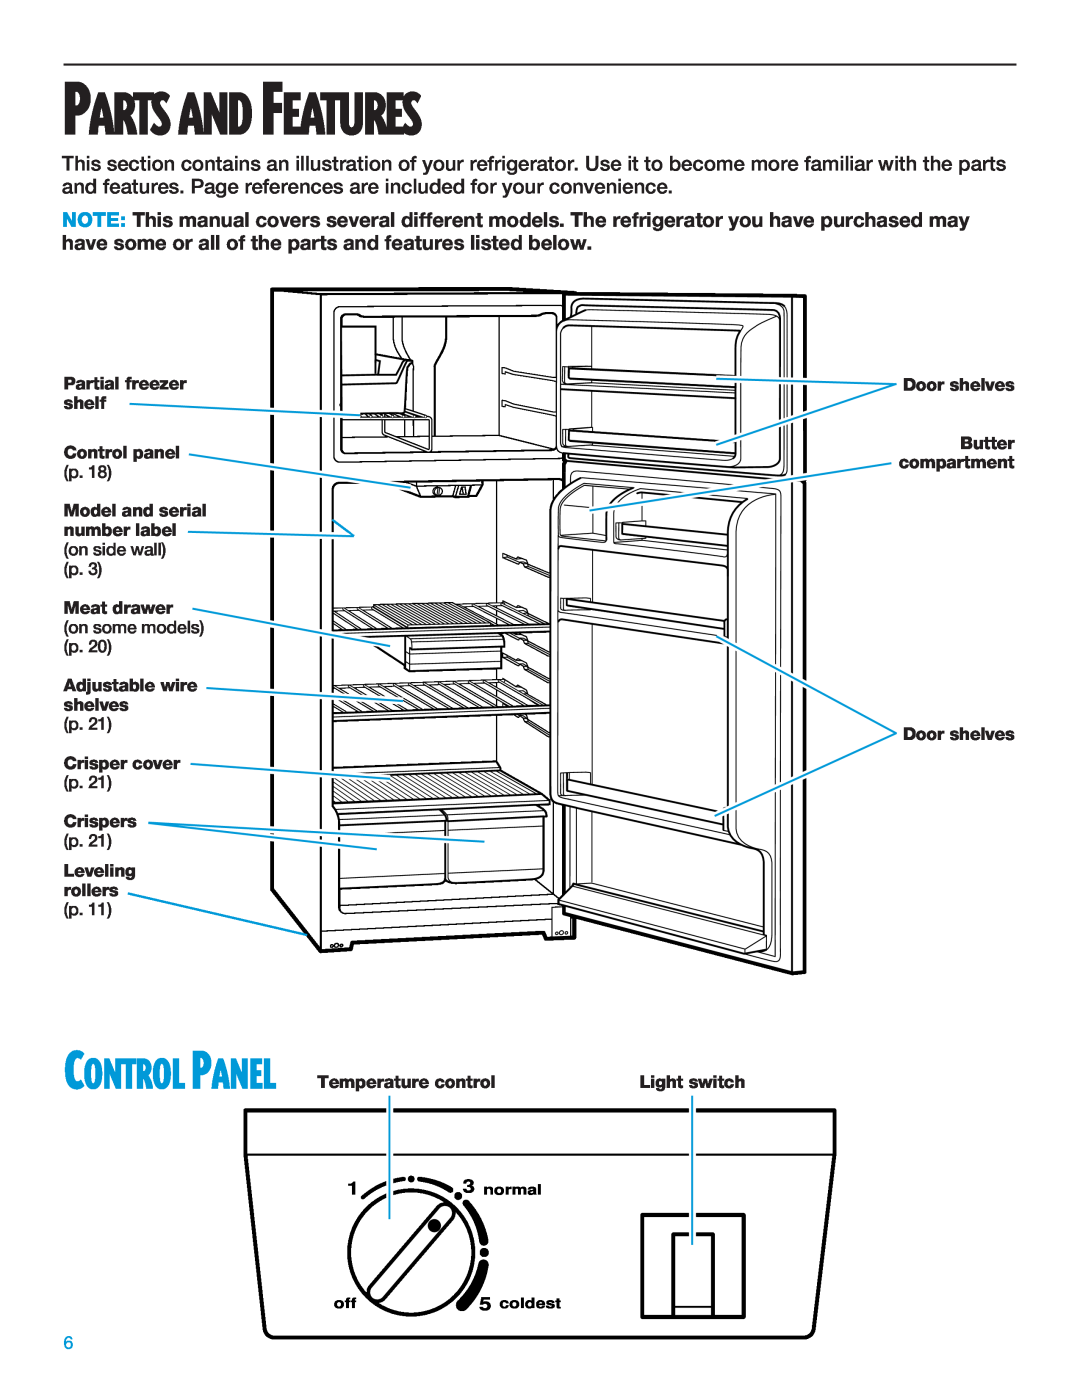 Whirlpool TT14DKXEW11 Parts And Features, Control Panel, Partial freezer shelf Control panel p, Crisper cover p Crispers 